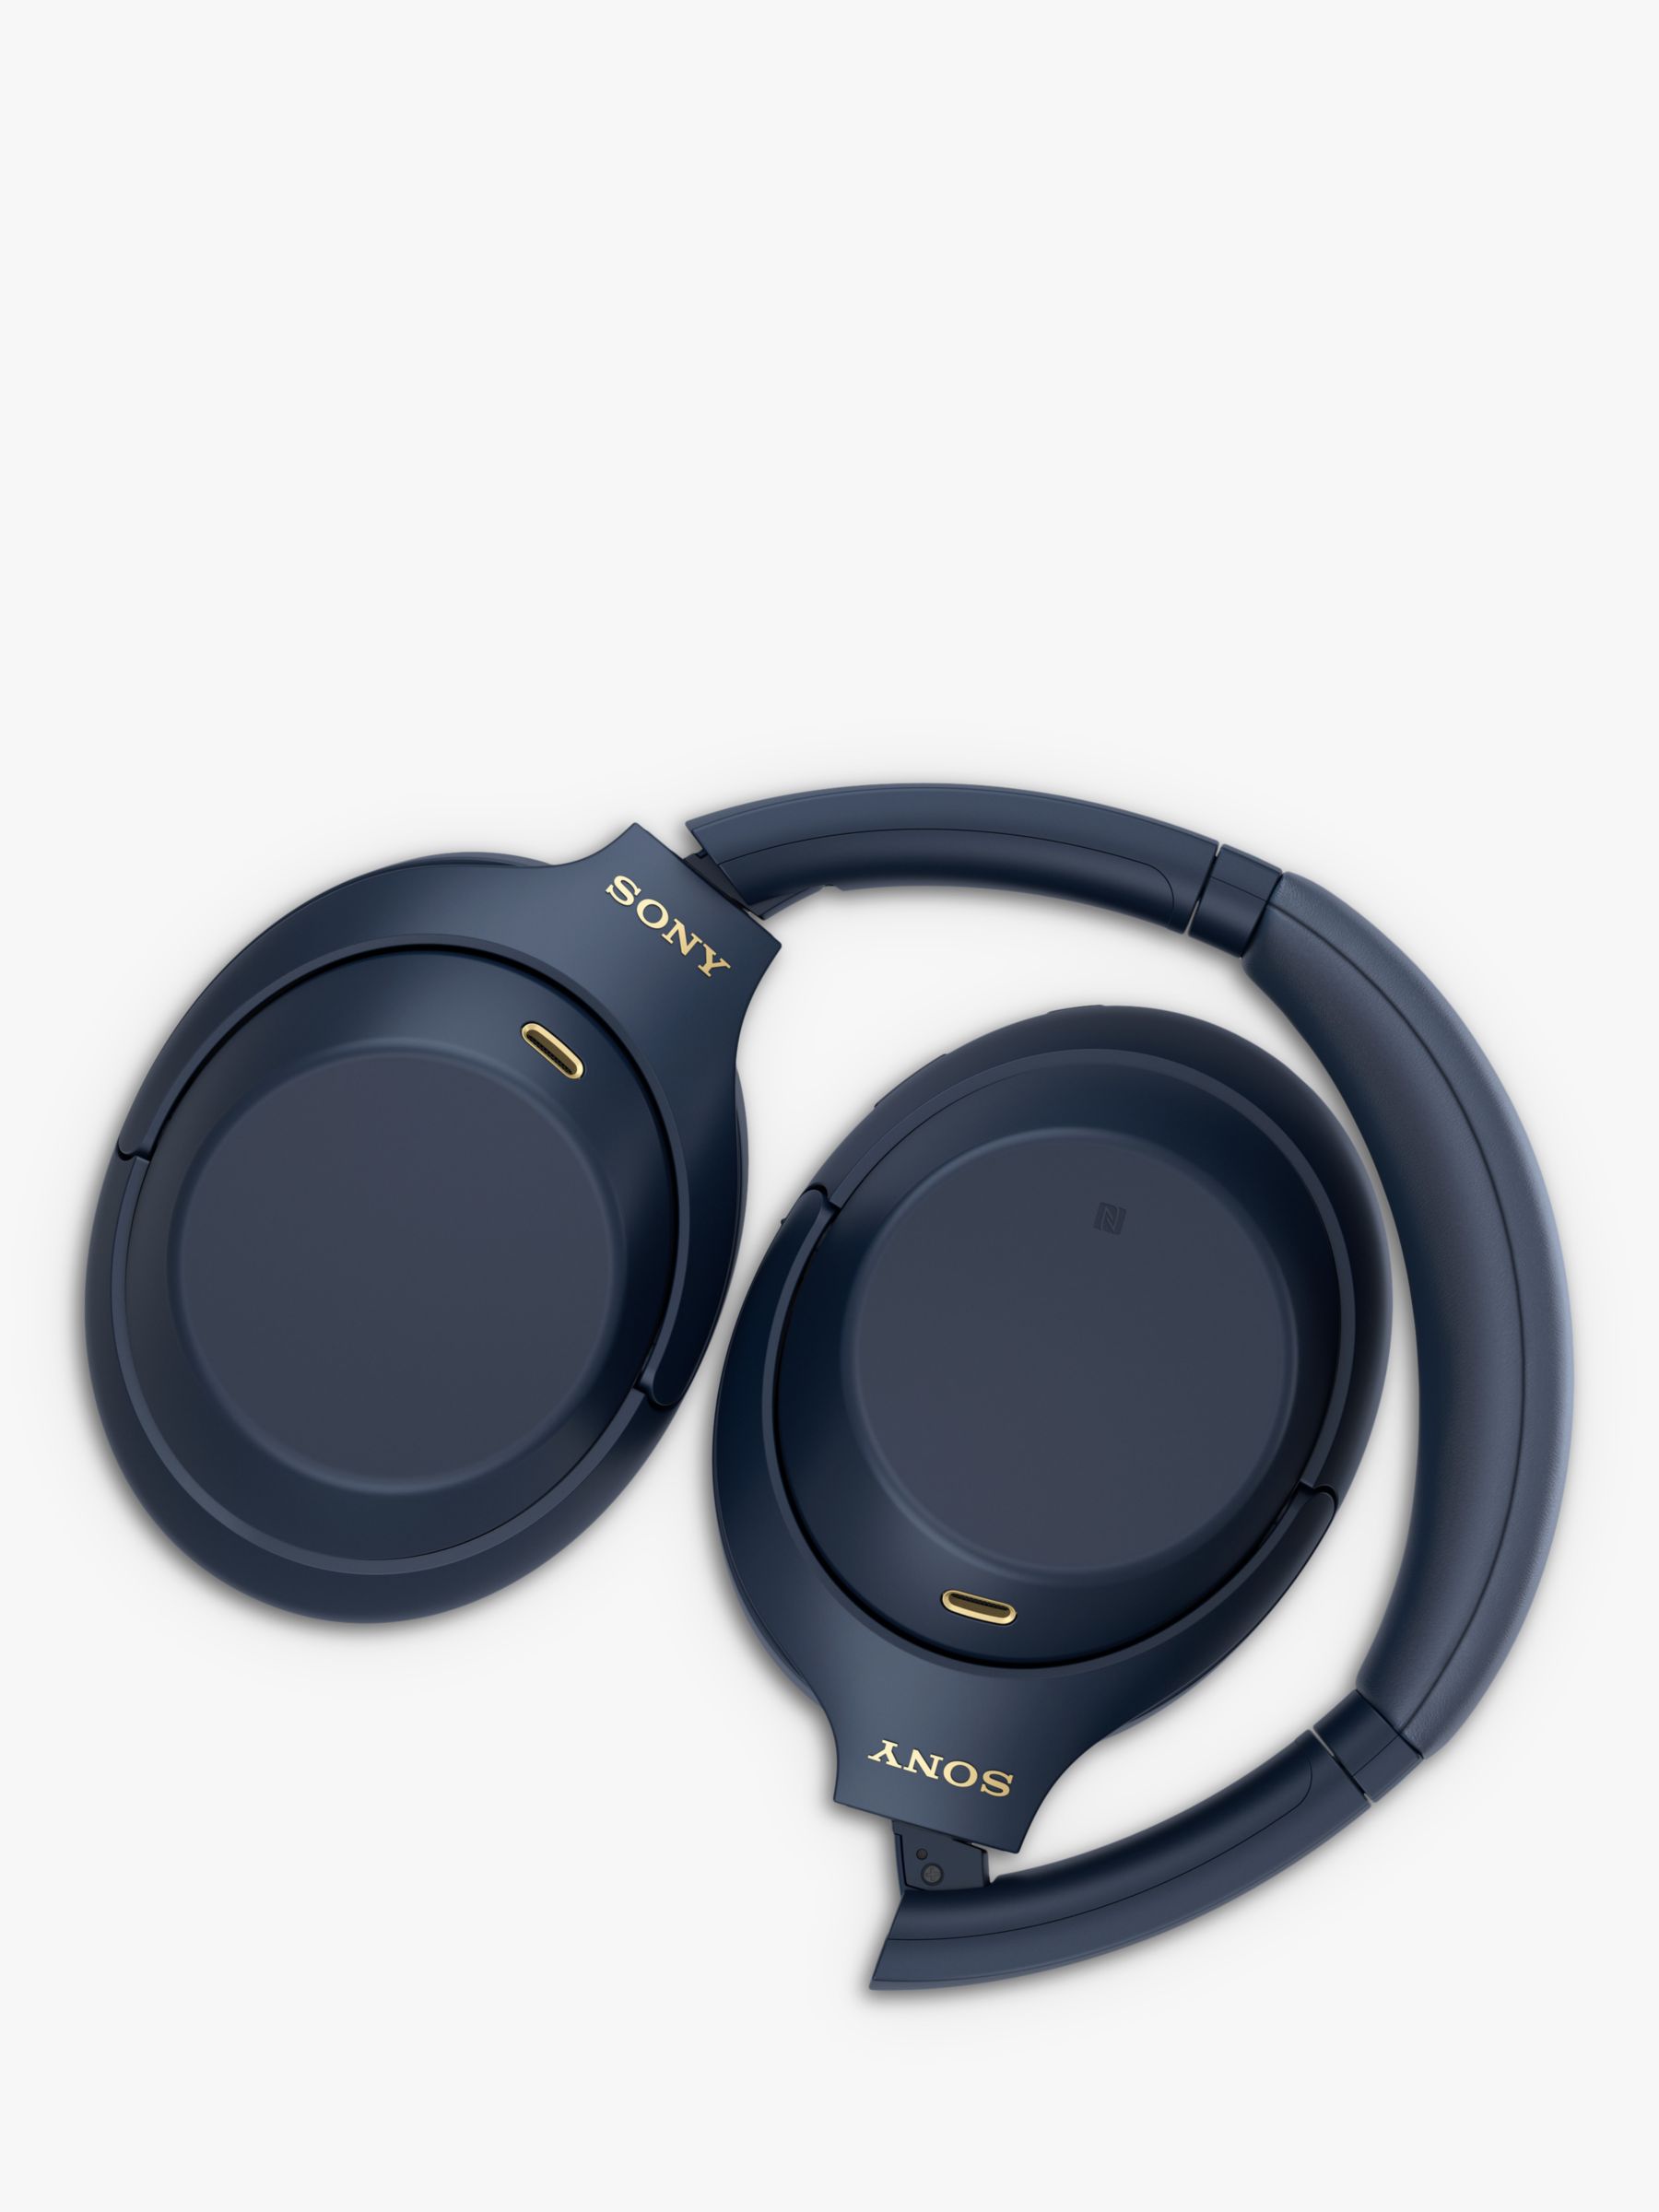 Sony WH-1000XM4 Wireless Premium Noise Canceling Overhead Headphones, Blue  (Renewed)